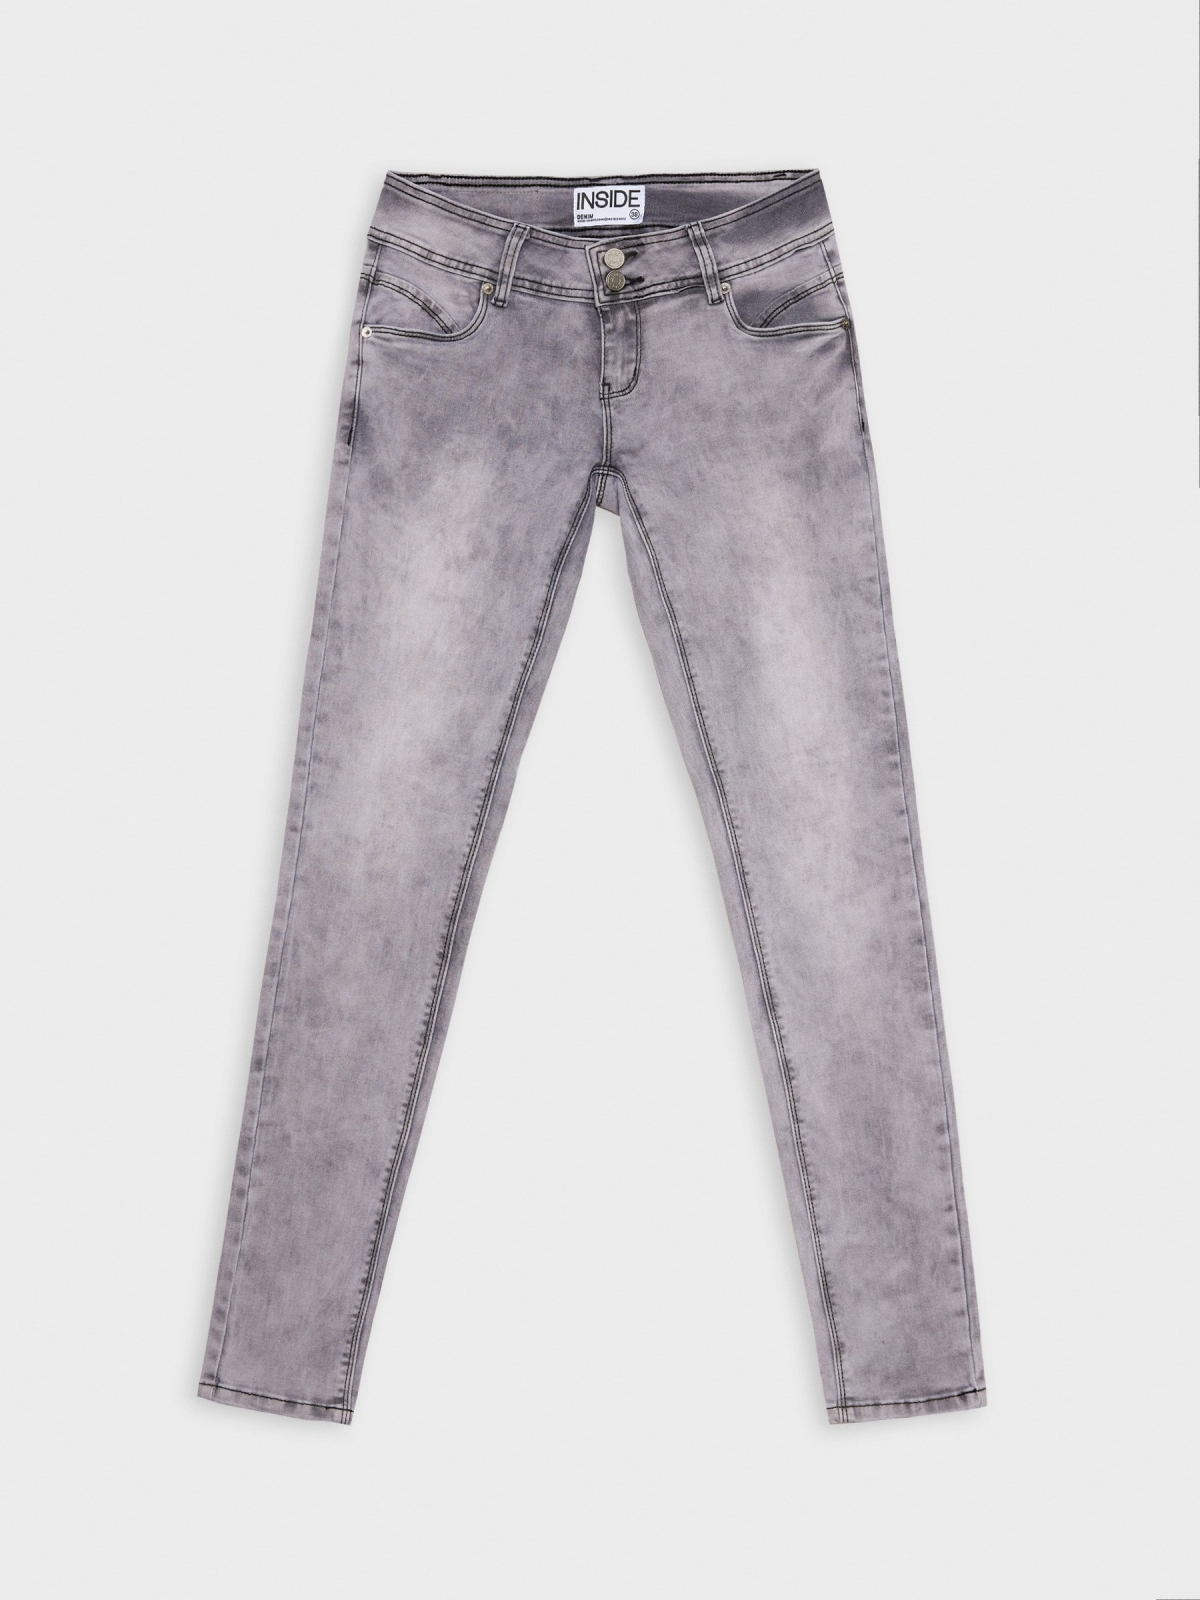  Jeans skinny efecto lavado tiro bajo gris claro